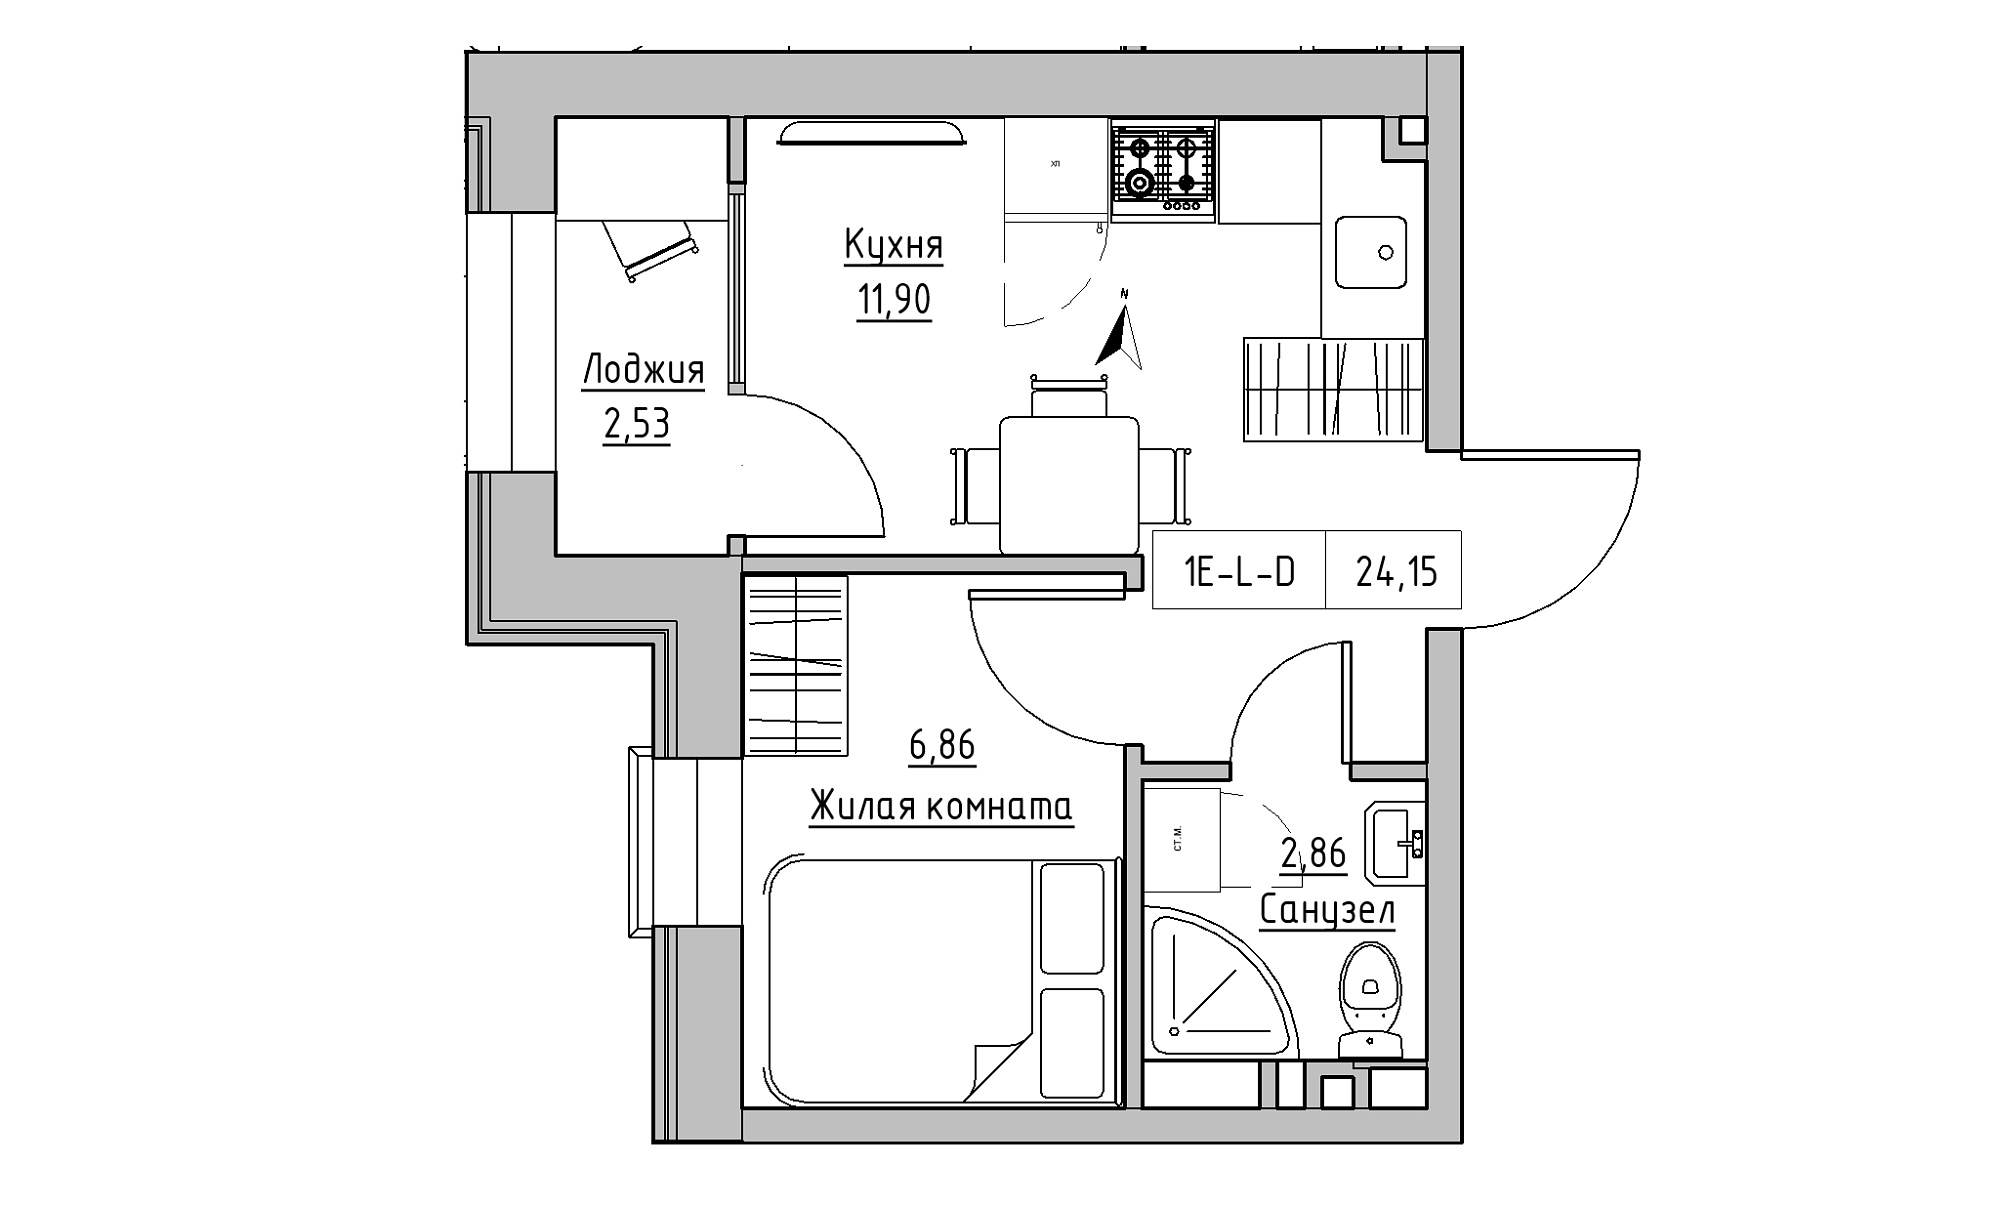 Planning 1-rm flats area 24.15m2, KS-023-01/0001.